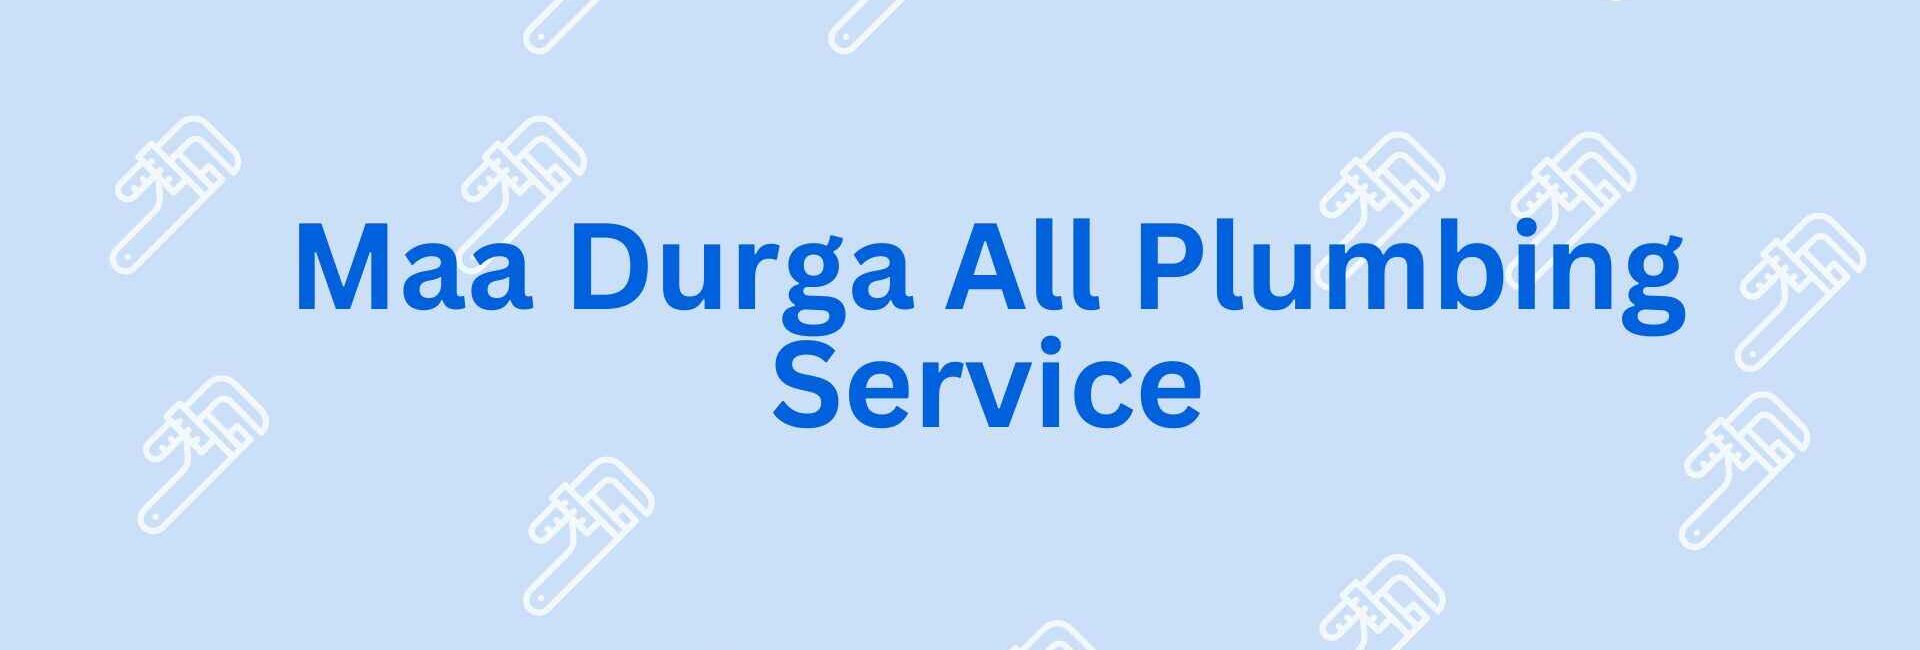 Maa Durga All Plumbing Service - Best Plumber Service Provider in Noida